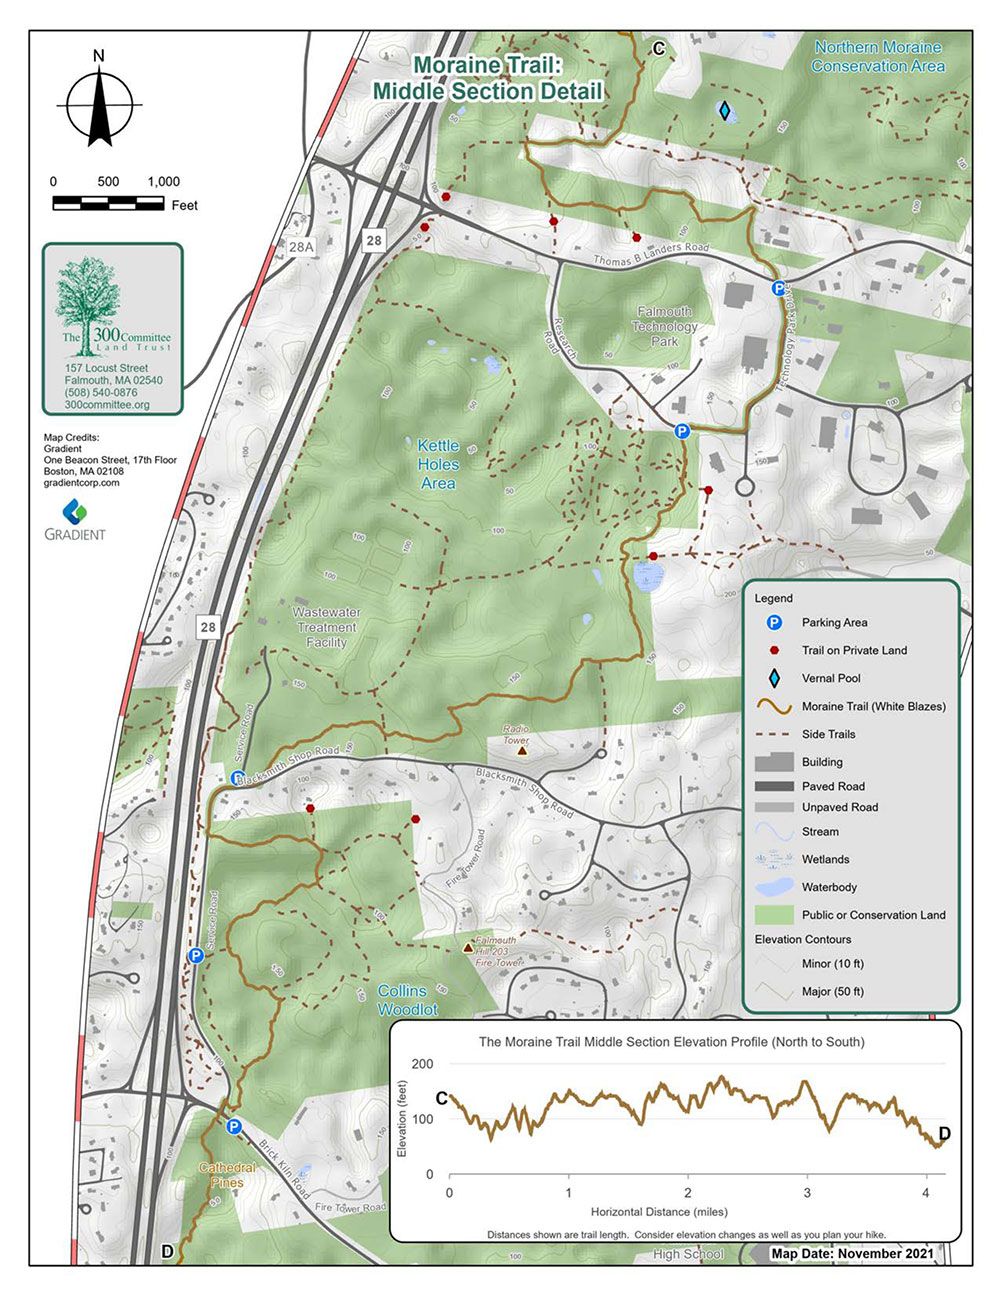 Moraine Trail Middle Section (includes Kettle Holes Area & Collins Woodlot)